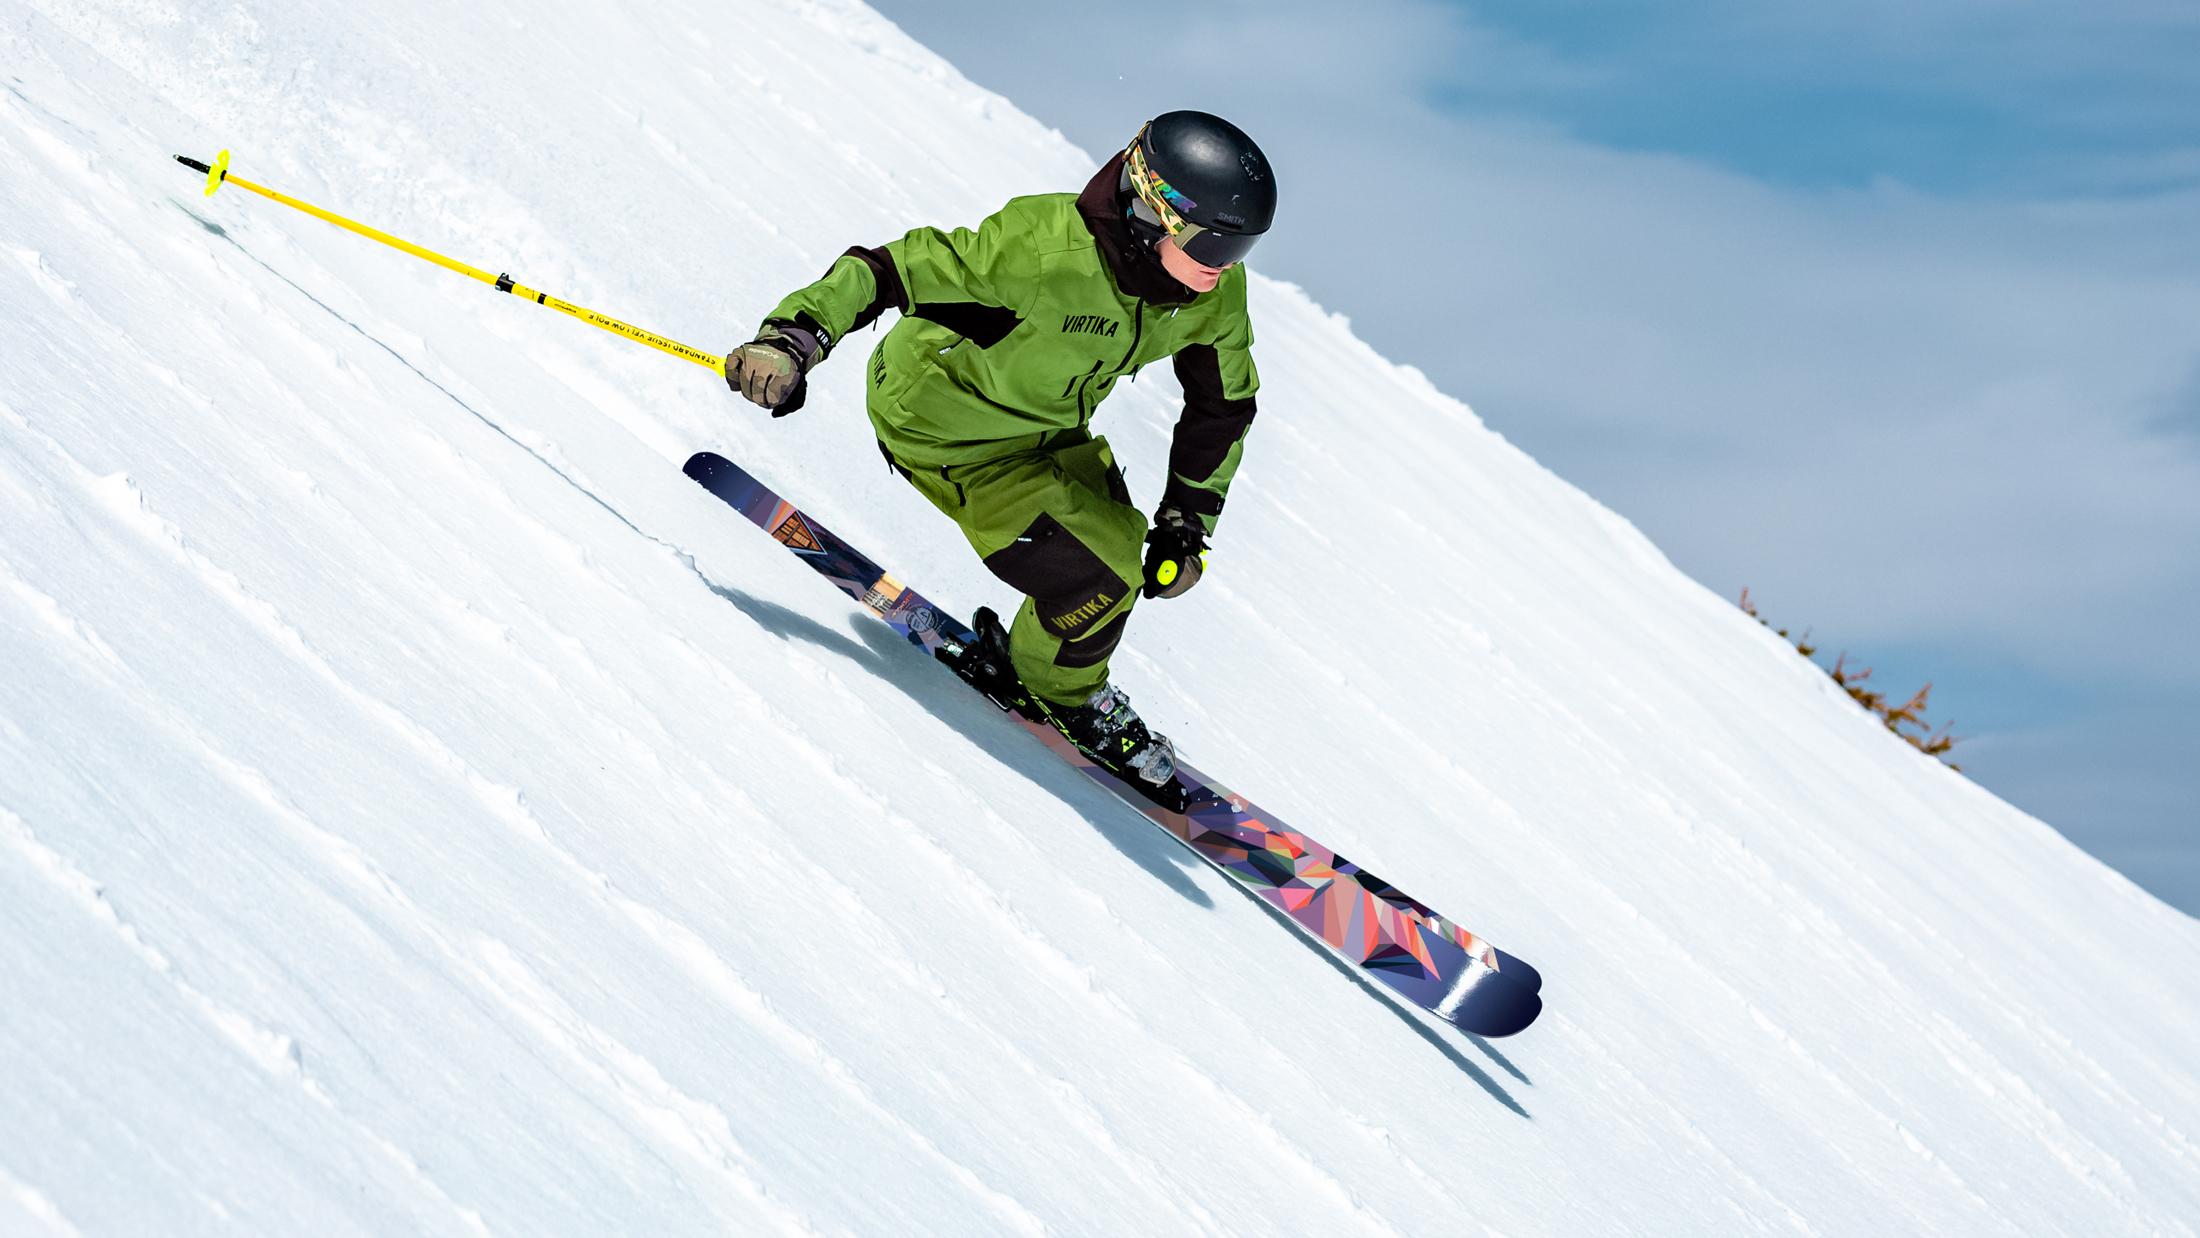 The Escalator "ALPENGLOW" Elyse Dodge x J Collab Limited Edition Ski Shredding Image